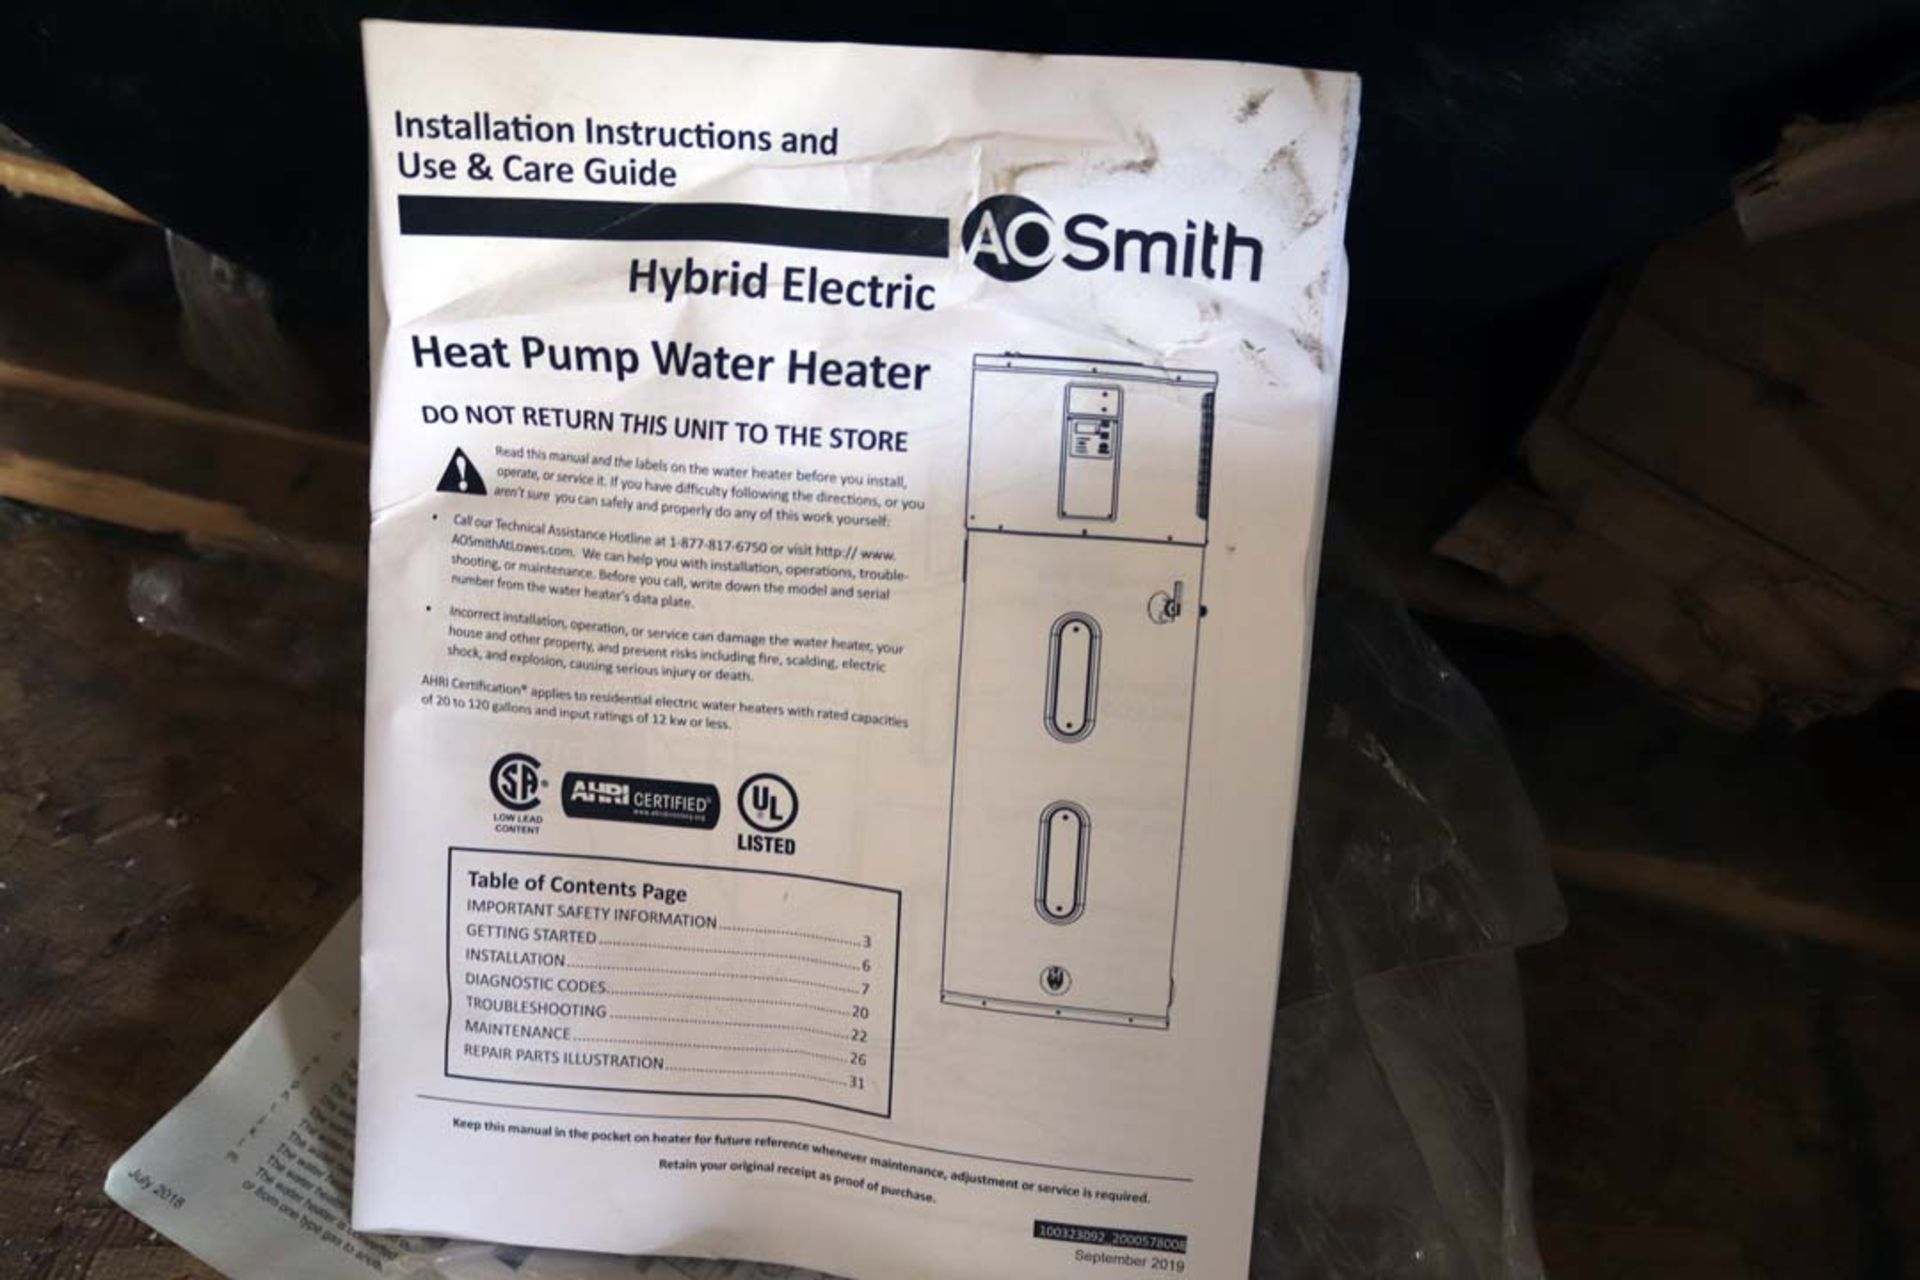 AO Smith Hybric Electric Heat Pump Water Heater